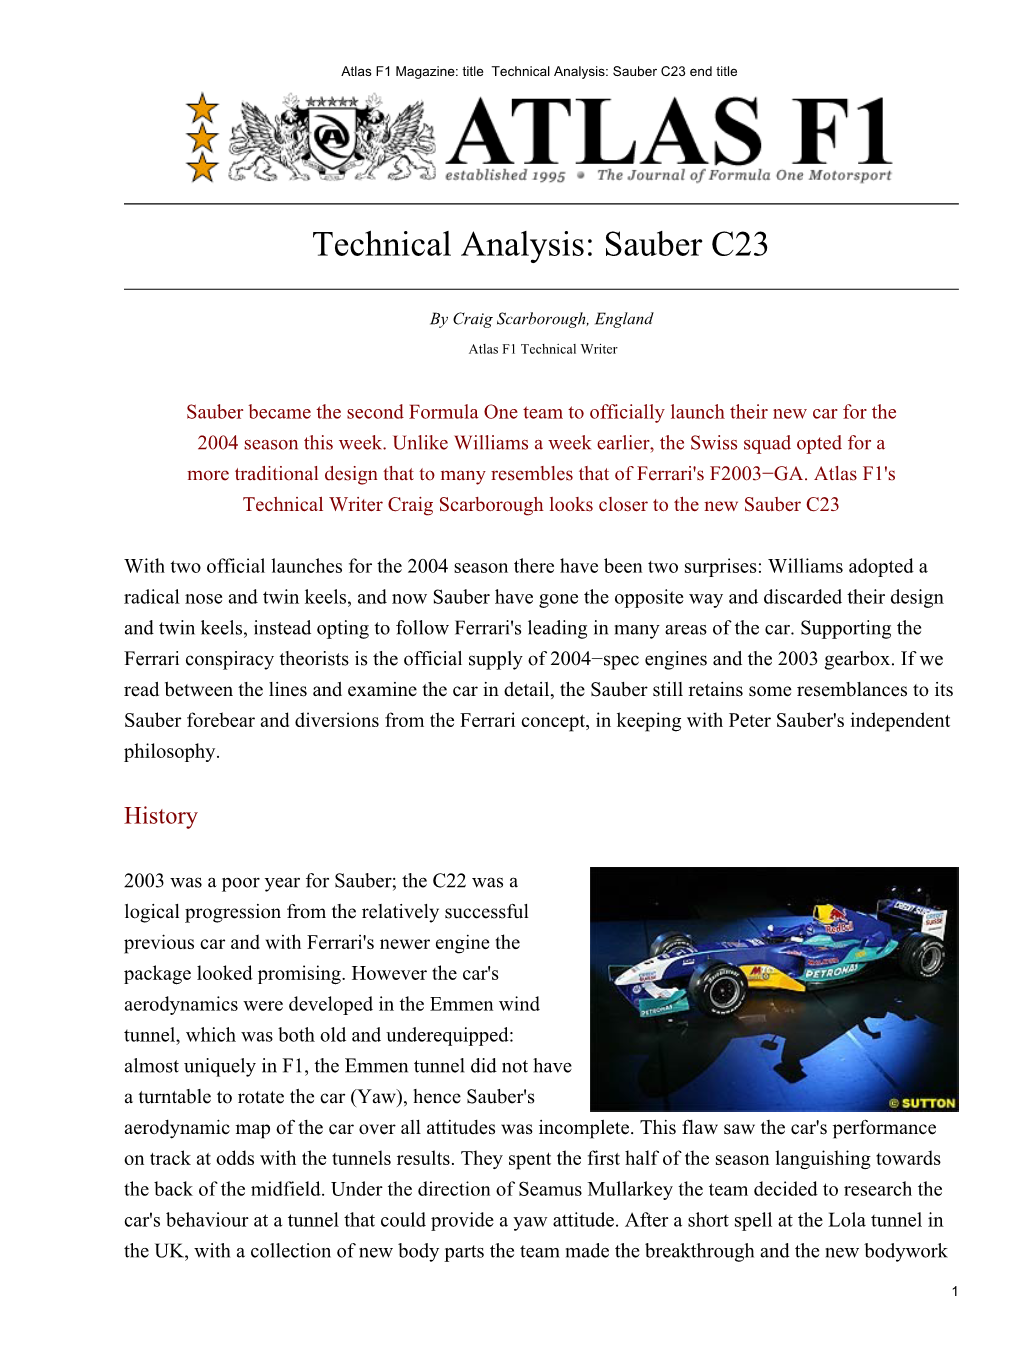 Atlas F1 Magazine: Title Technical Analysis: Sauber C23 End Title